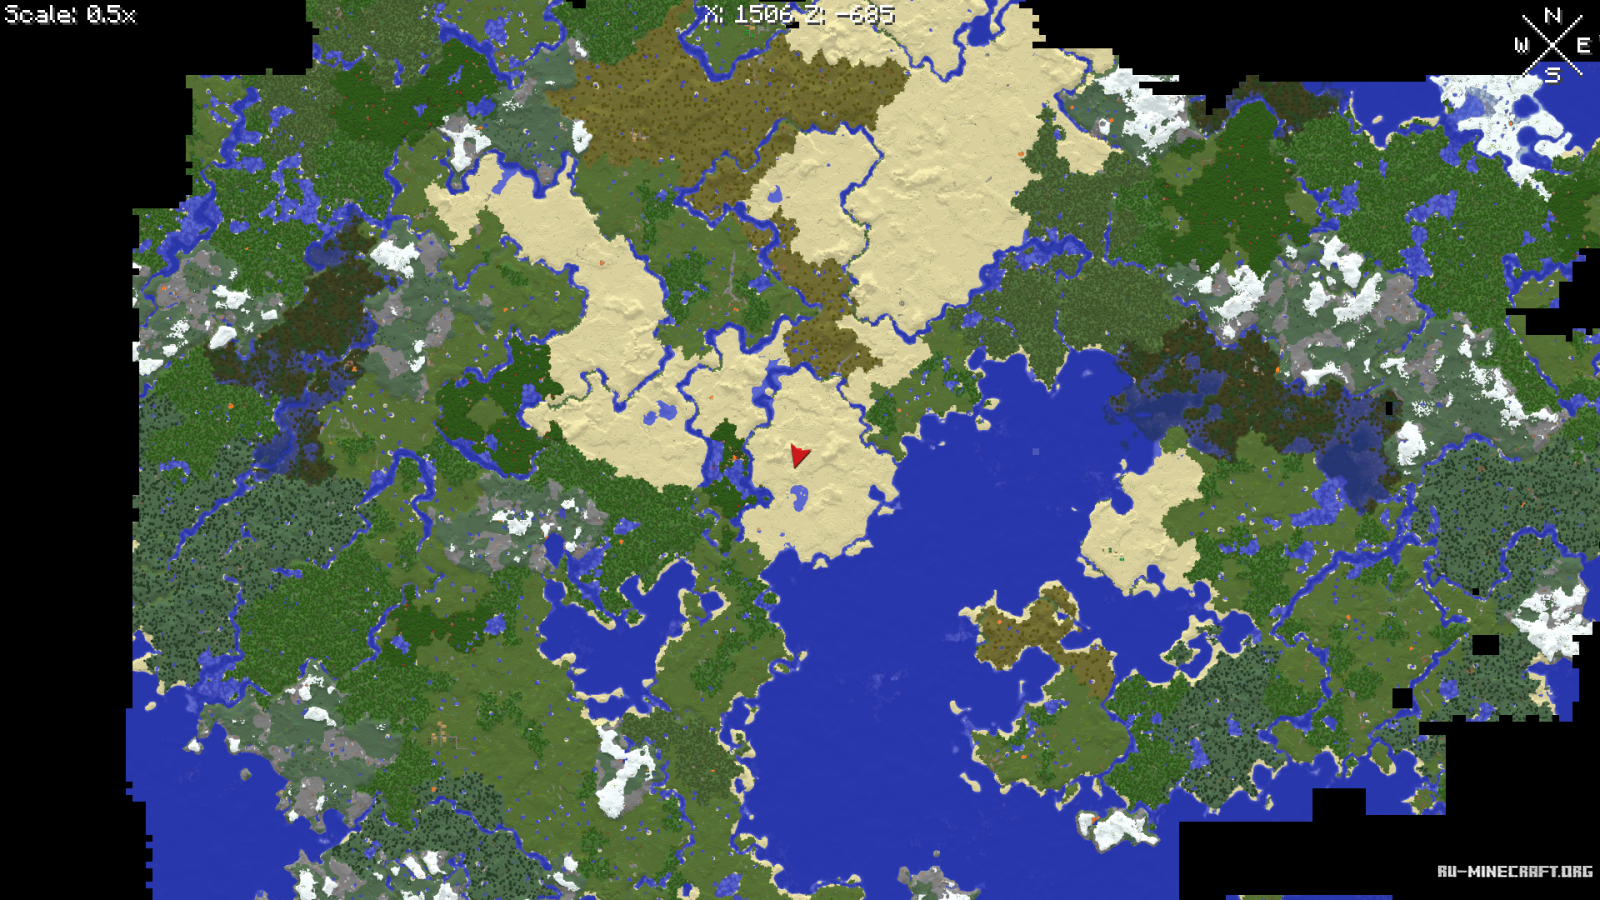 minecraft maps 1.12.2 for pixelmon